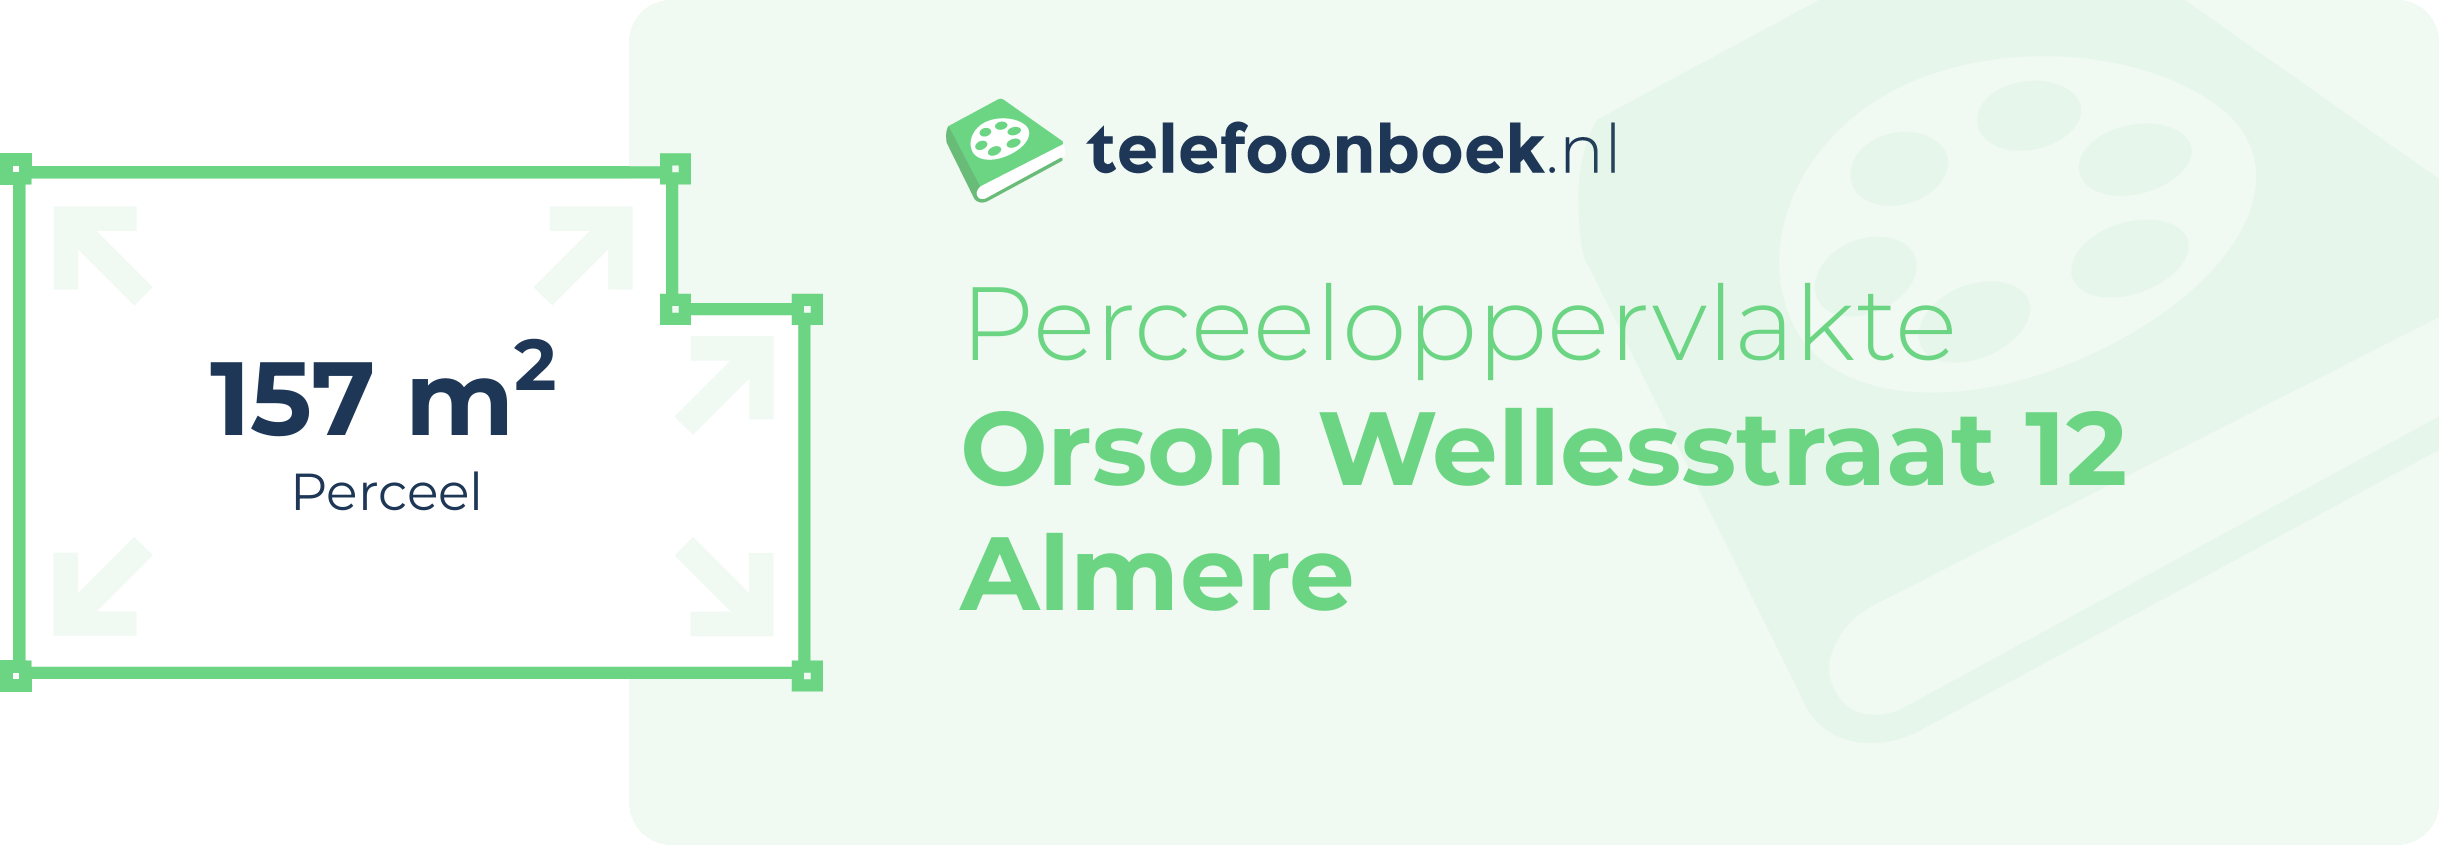 Perceeloppervlakte Orson Wellesstraat 12 Almere